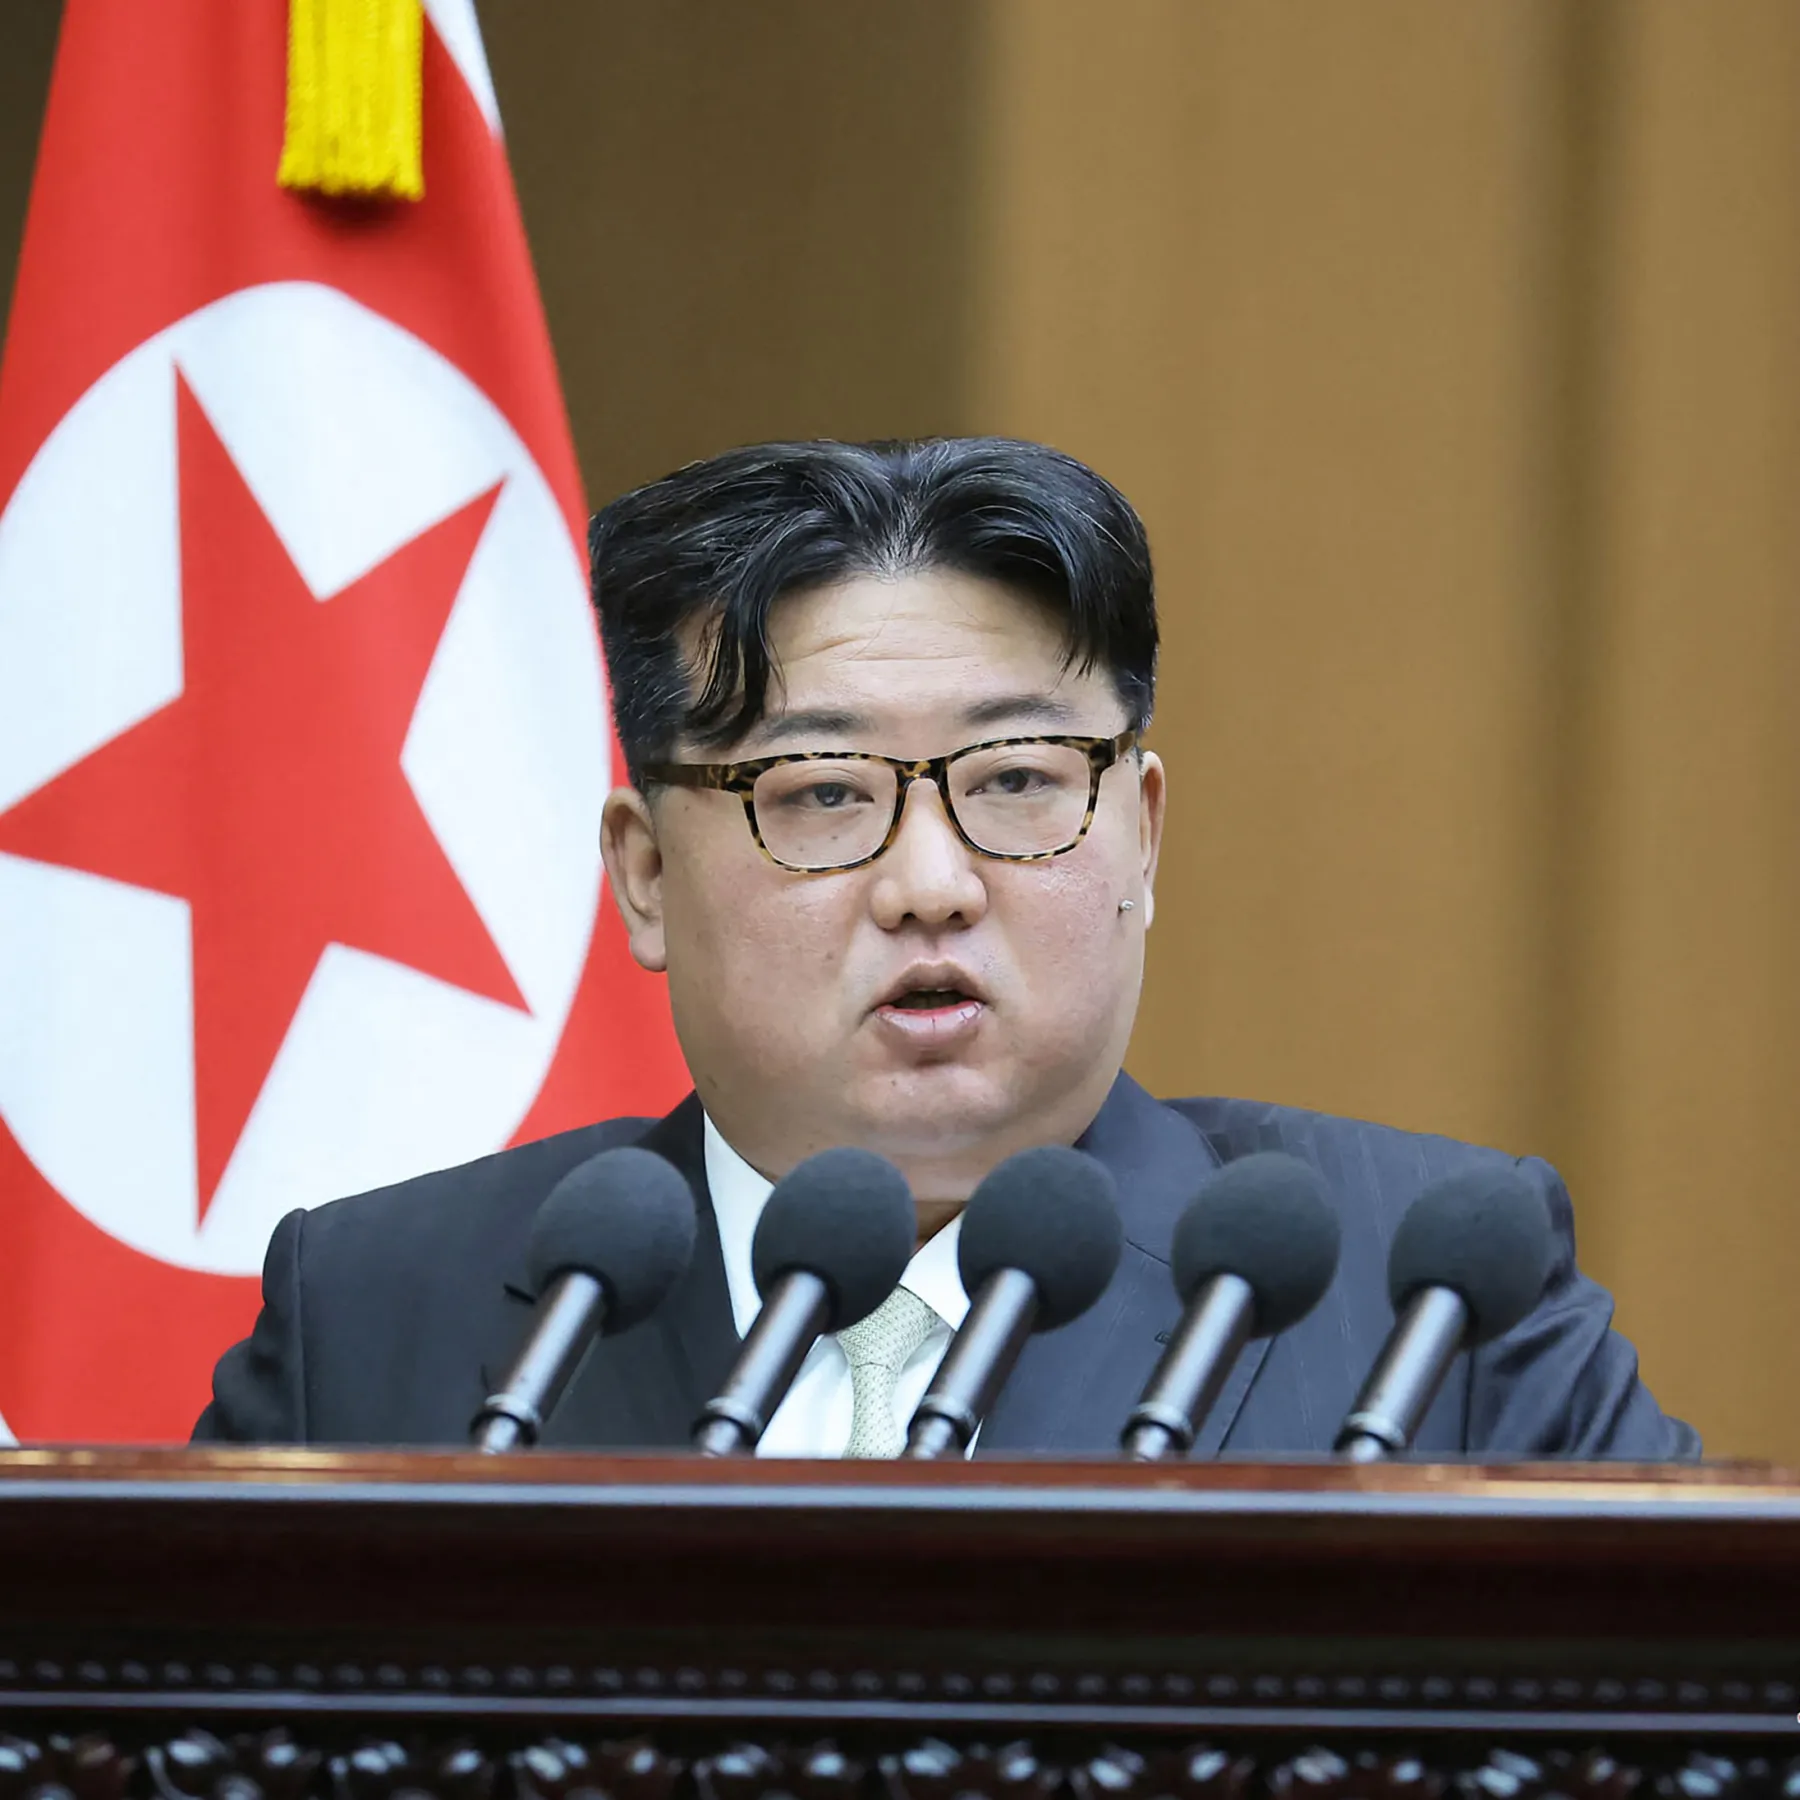 North Korea: Urgency and Catastrophe Ahead